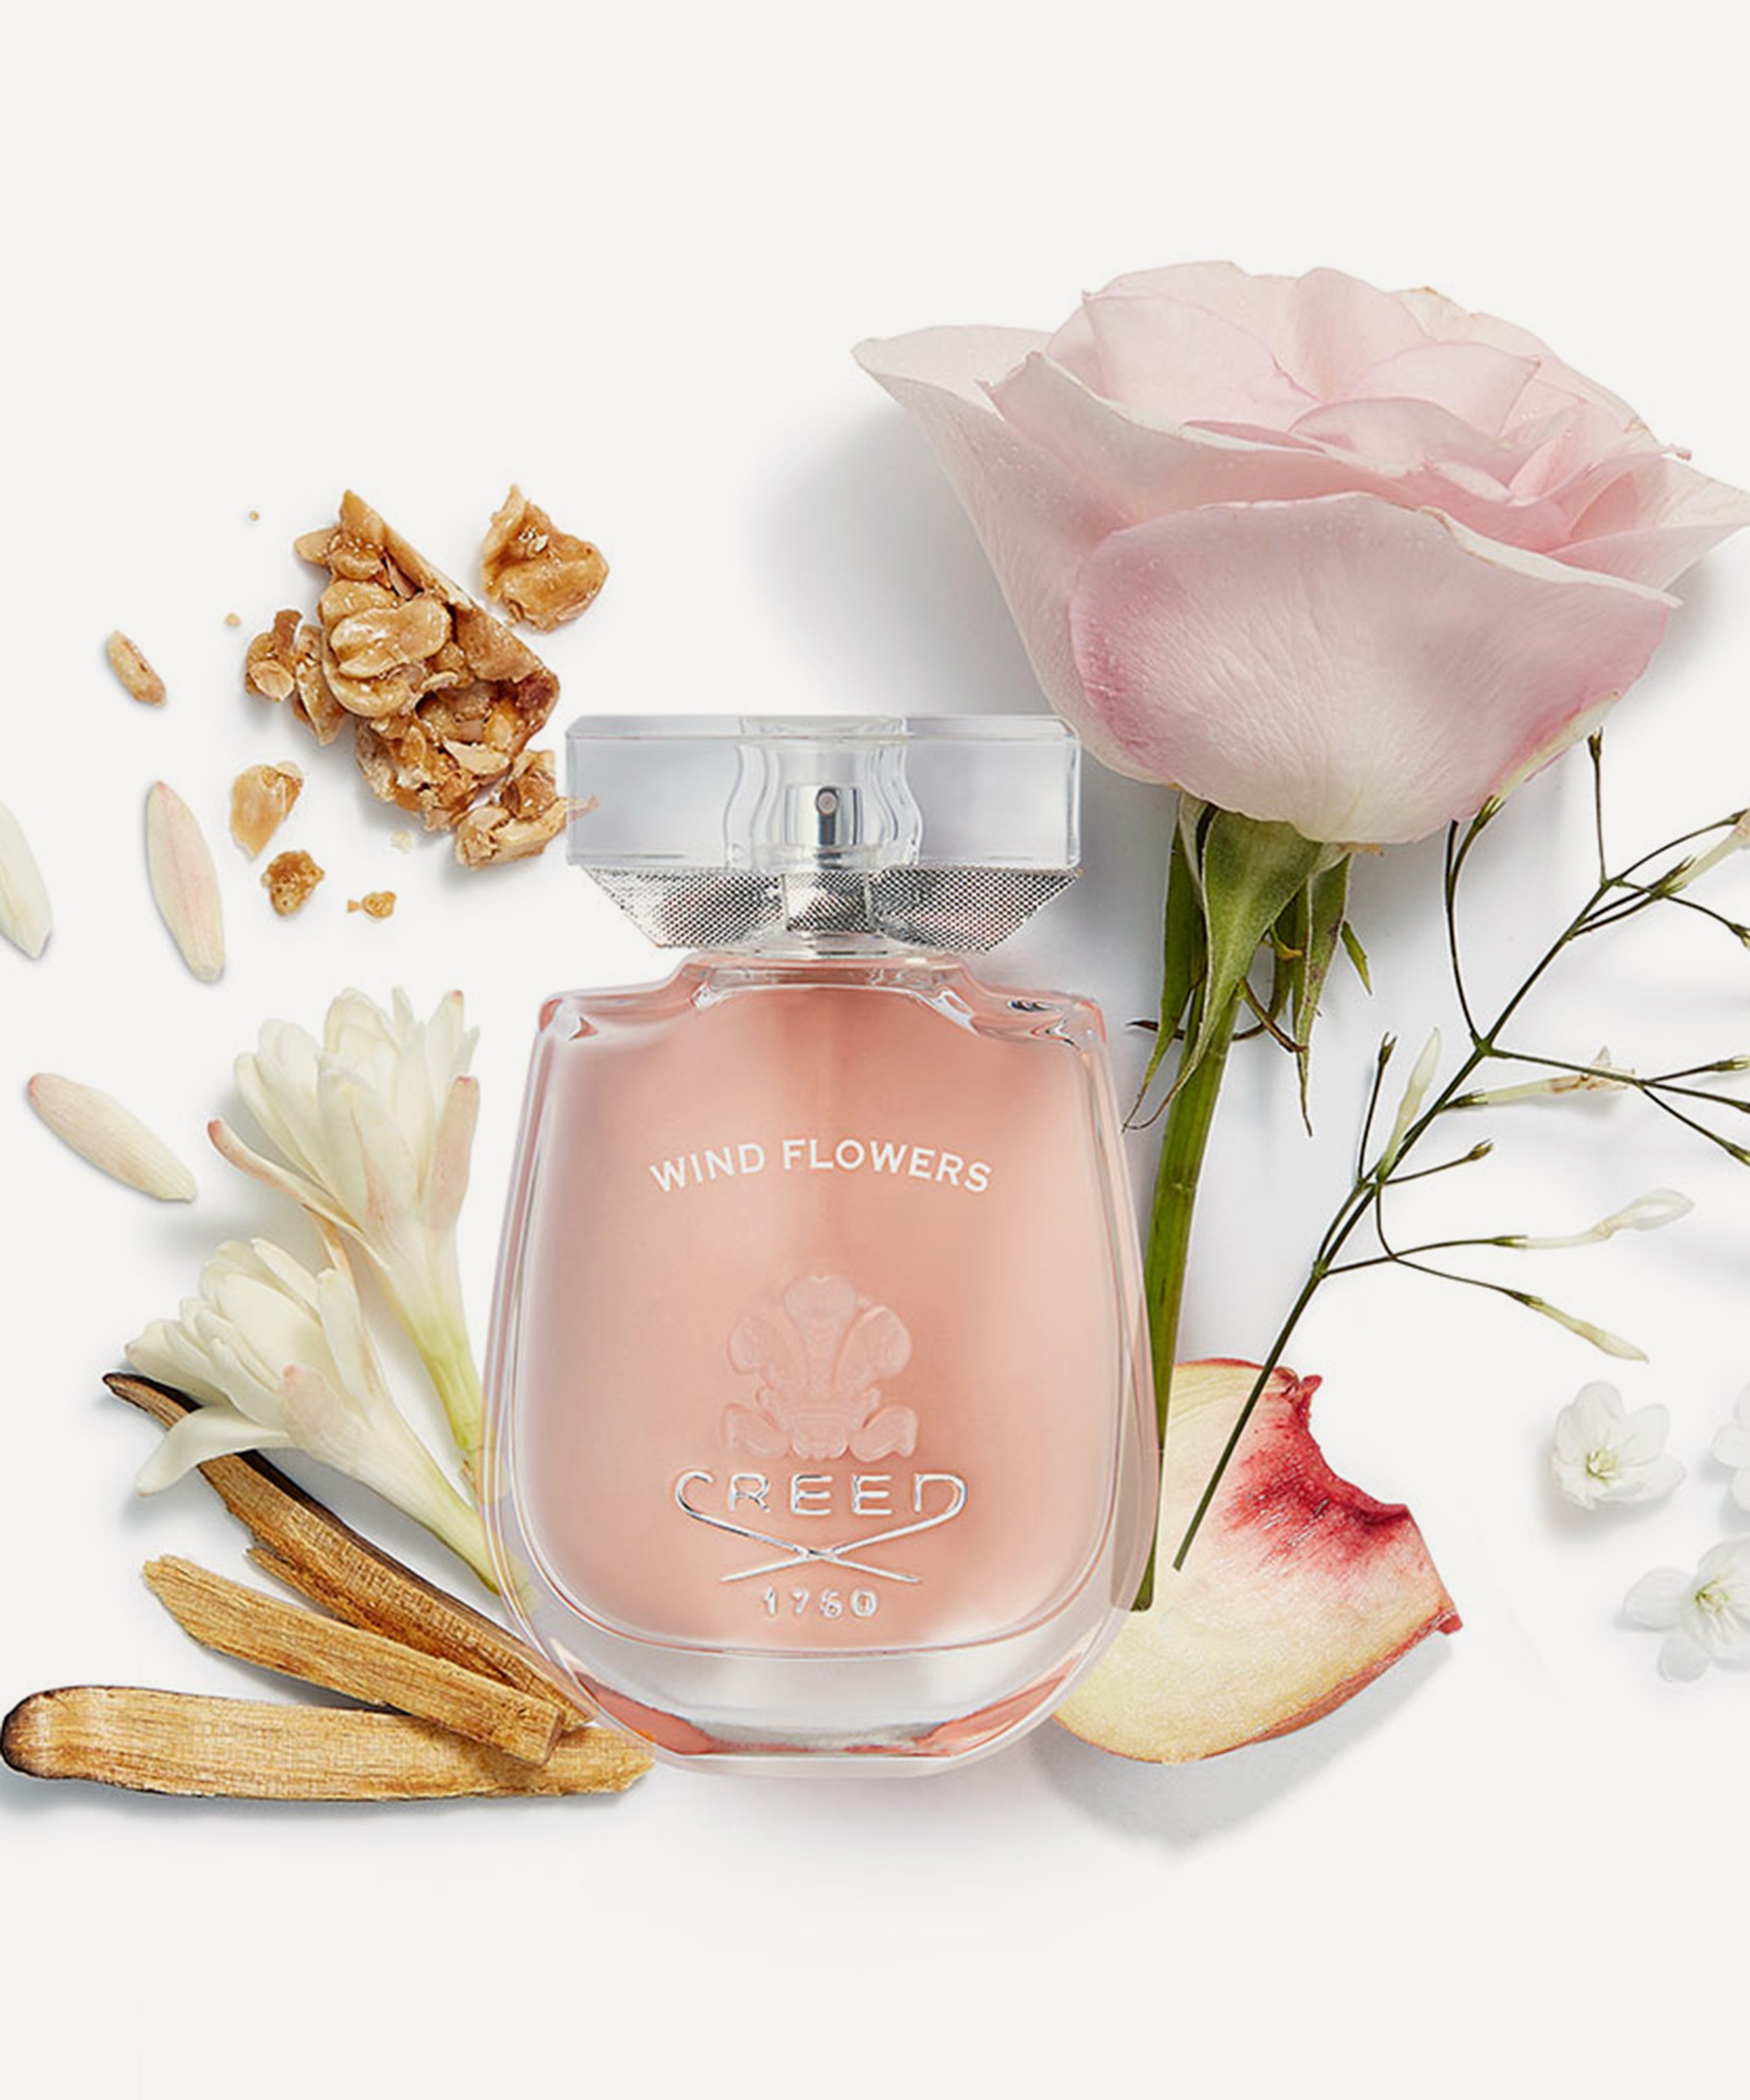 Creed - Wind Flowers Eau de Parfum 75ml image number 1